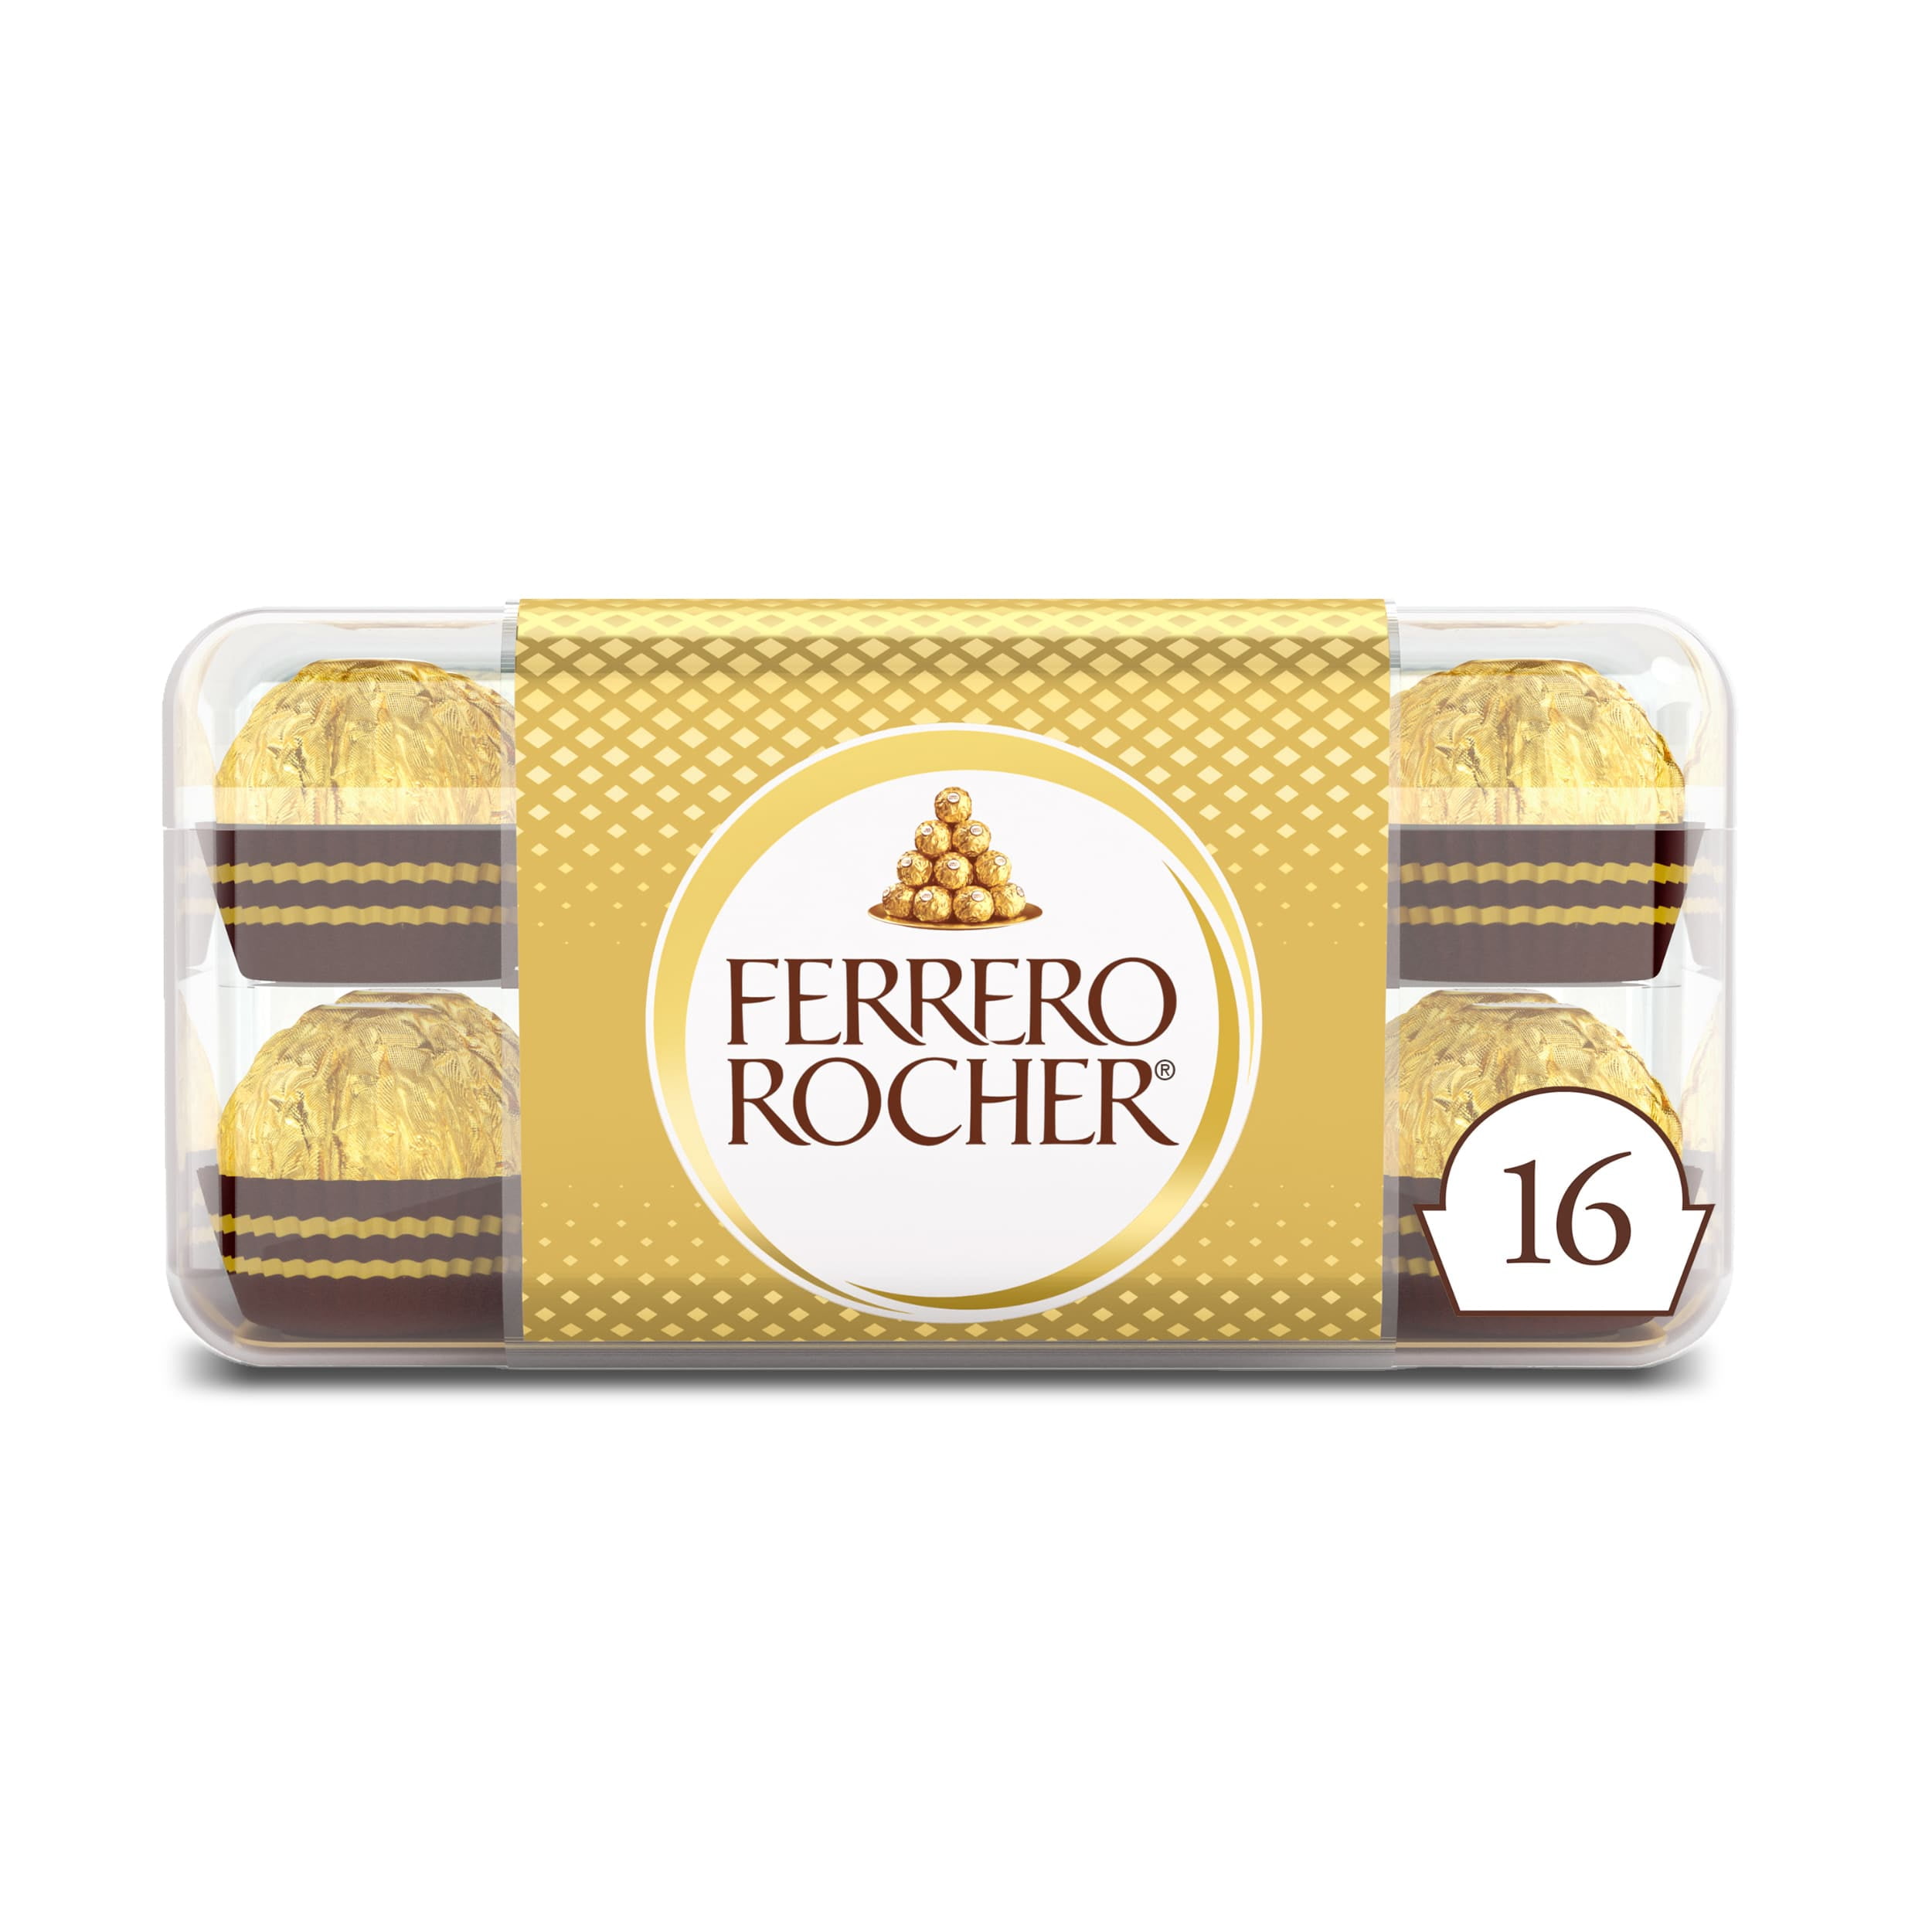 Ferrero Collection, 16 Count, Assorted Milk and Dark Chocolate Hazelnut and  Coconut, Valentine's Chocolate, 6.1 oz